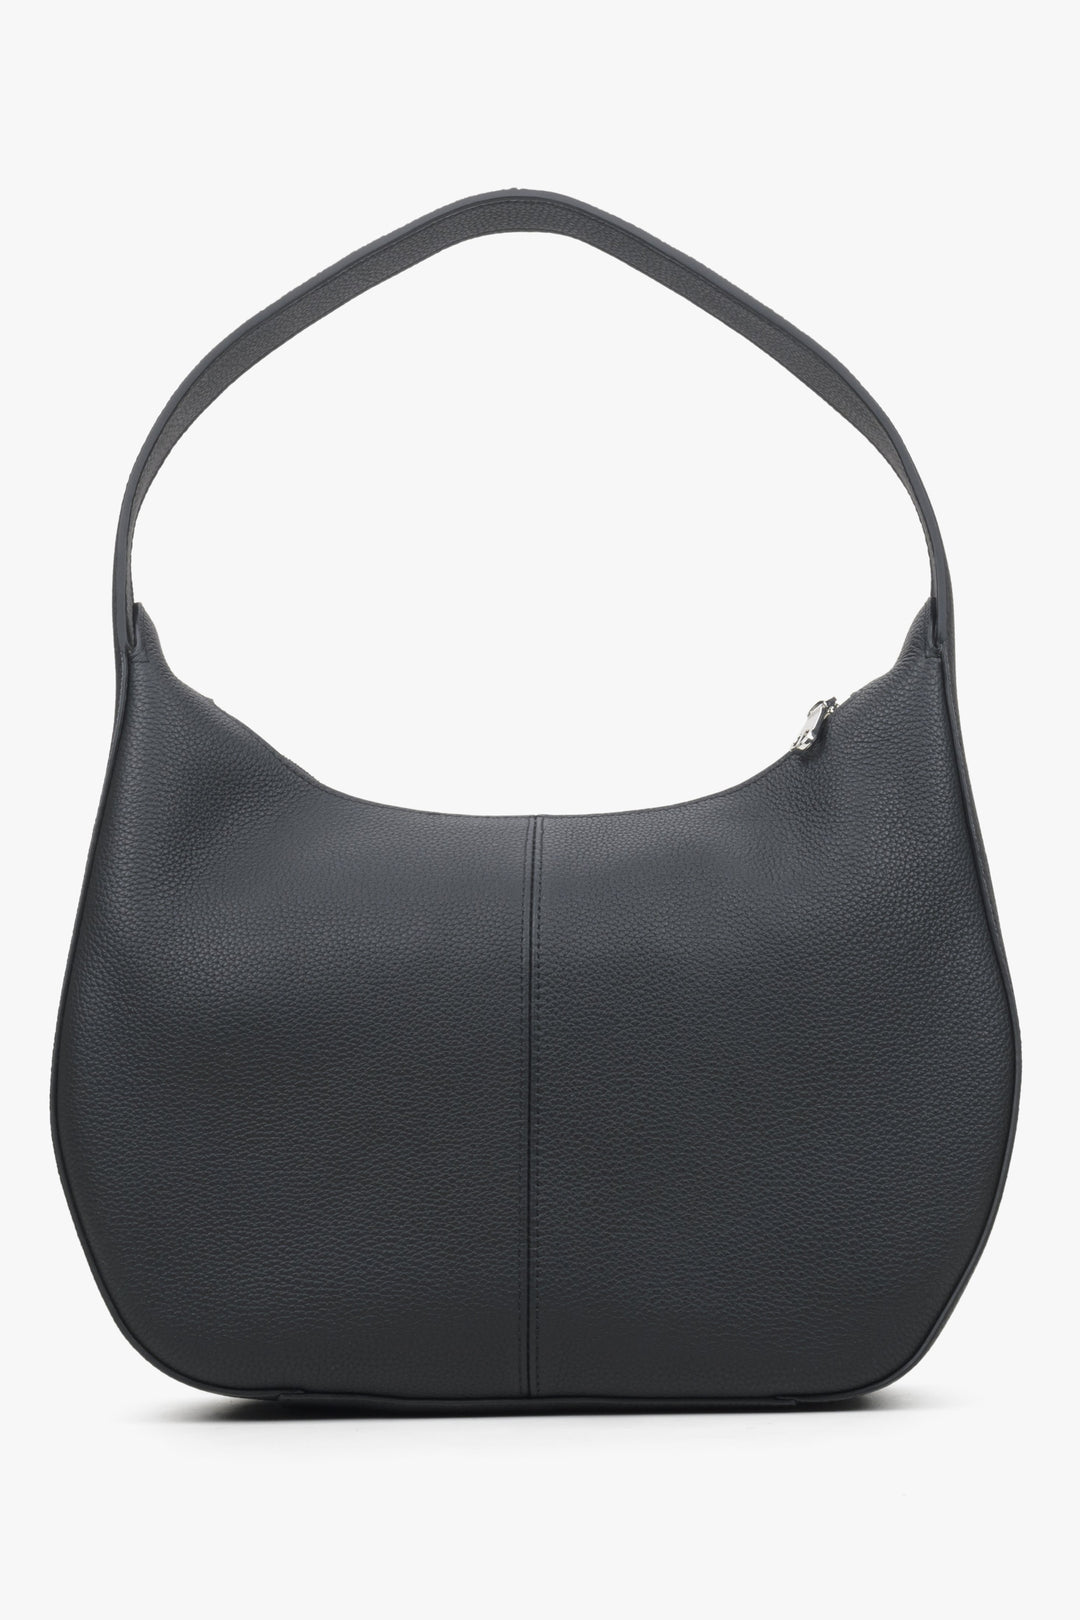 Estro crescent-shaped women's handbag - reverse side, in black.